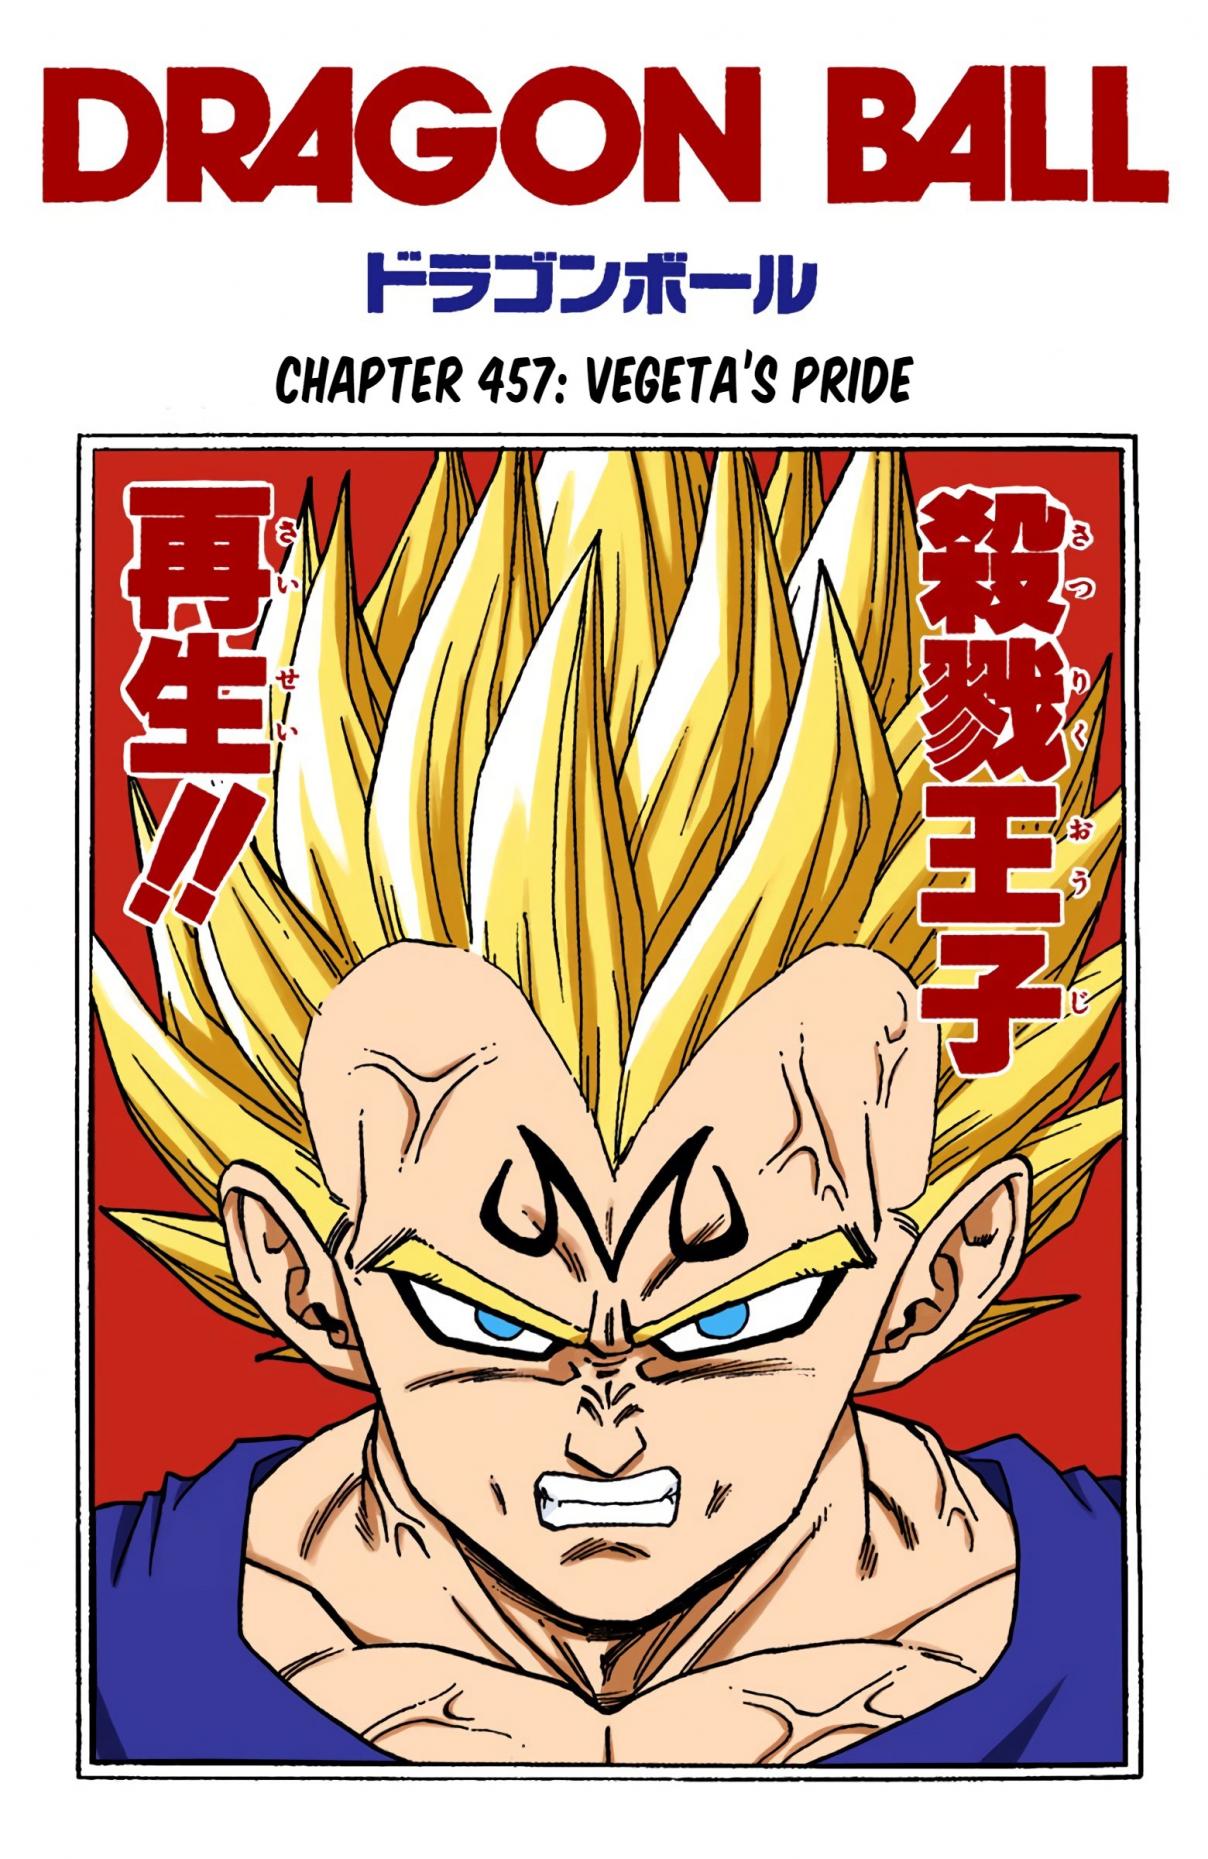 Dragon Ball - Digital Colored Comics 457 Vegeta’s Pride